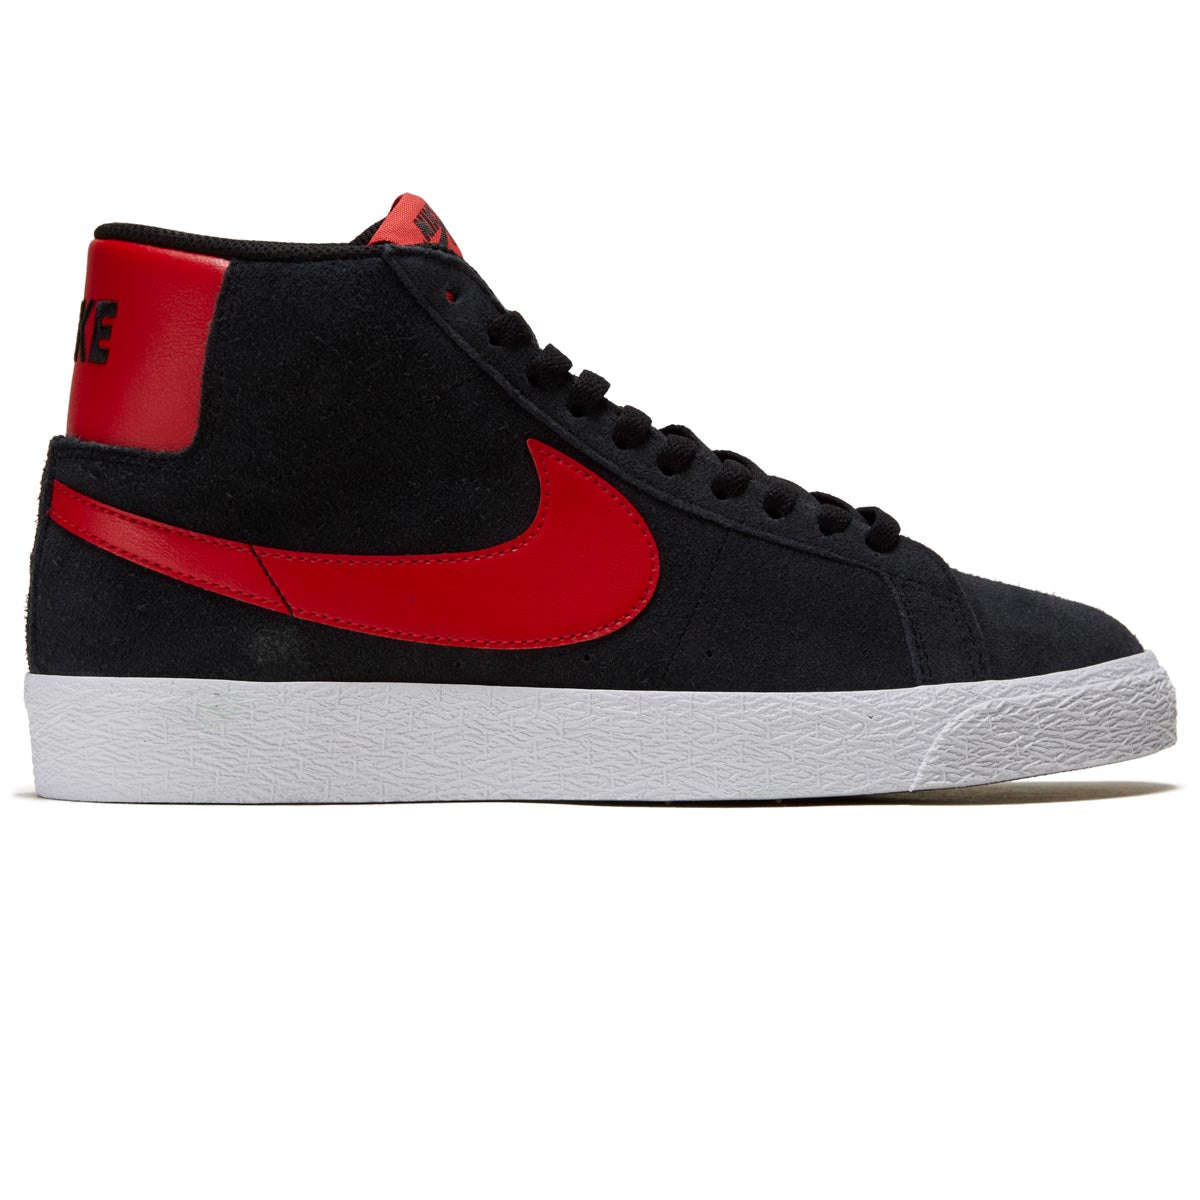 Nike SB Zoom Blazer Mid Shoes - Black/University Red/Black/White image 1